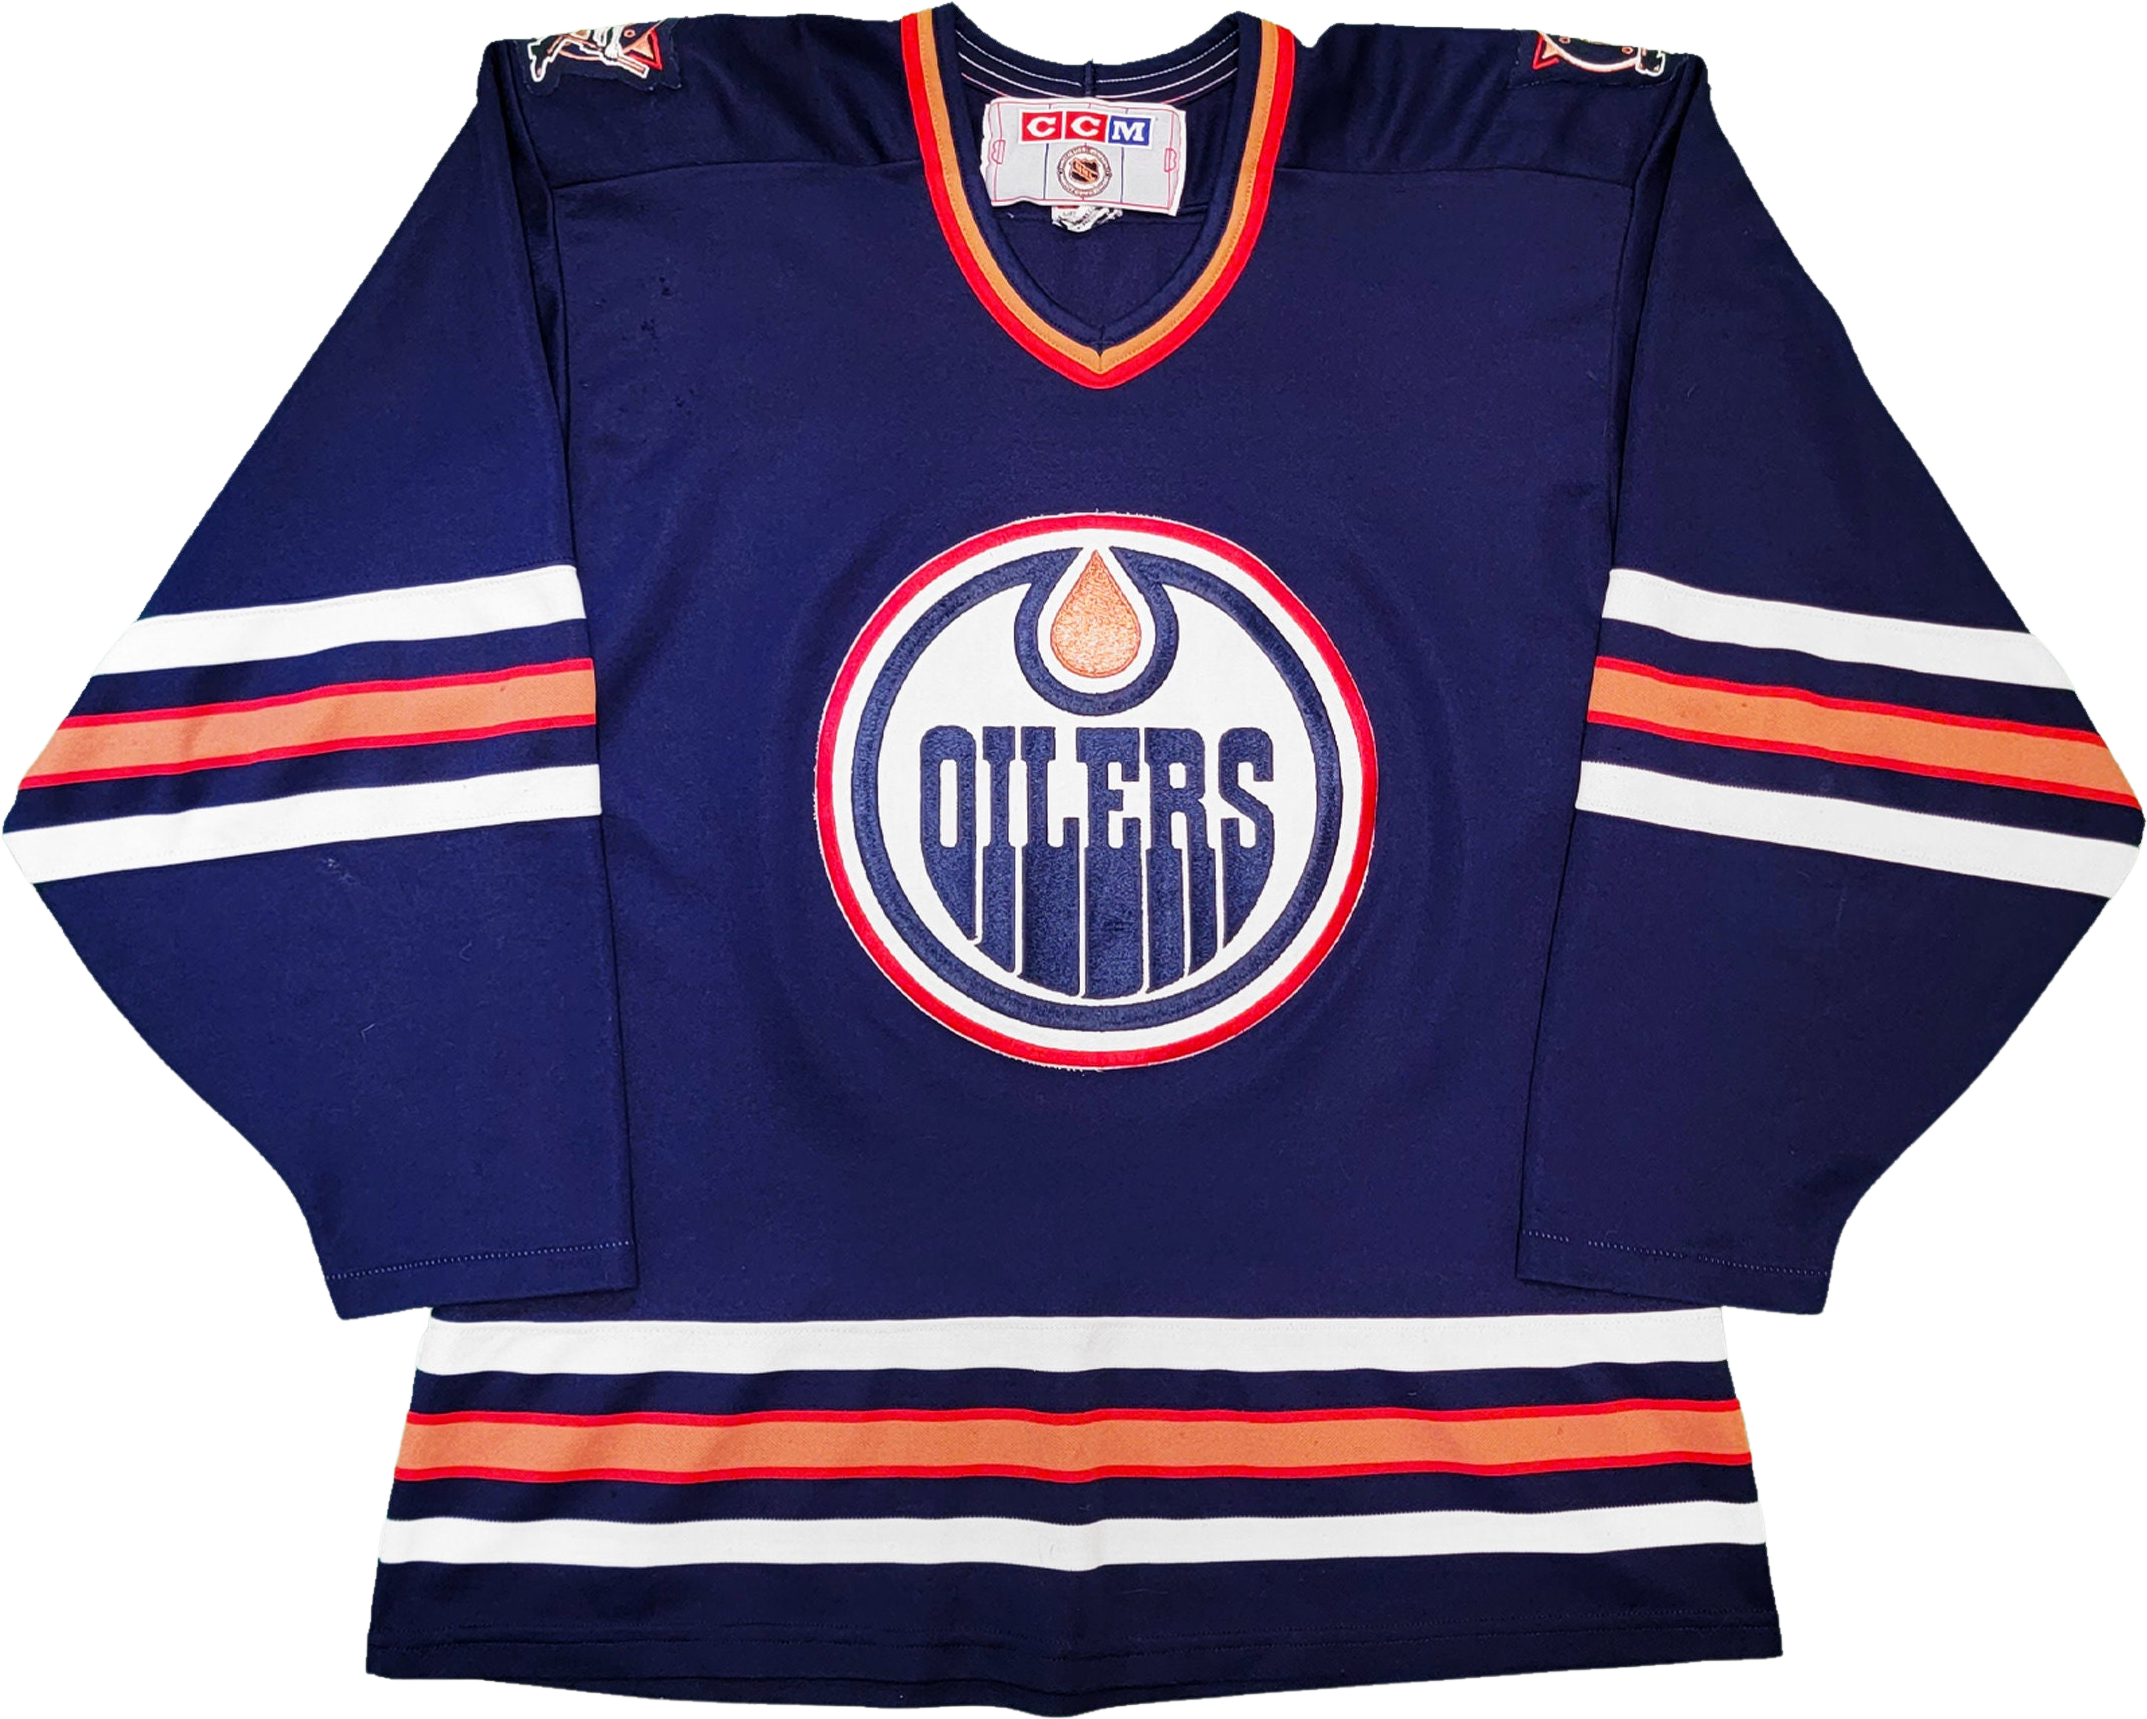 70s/80s Edmonton Oilers sweater